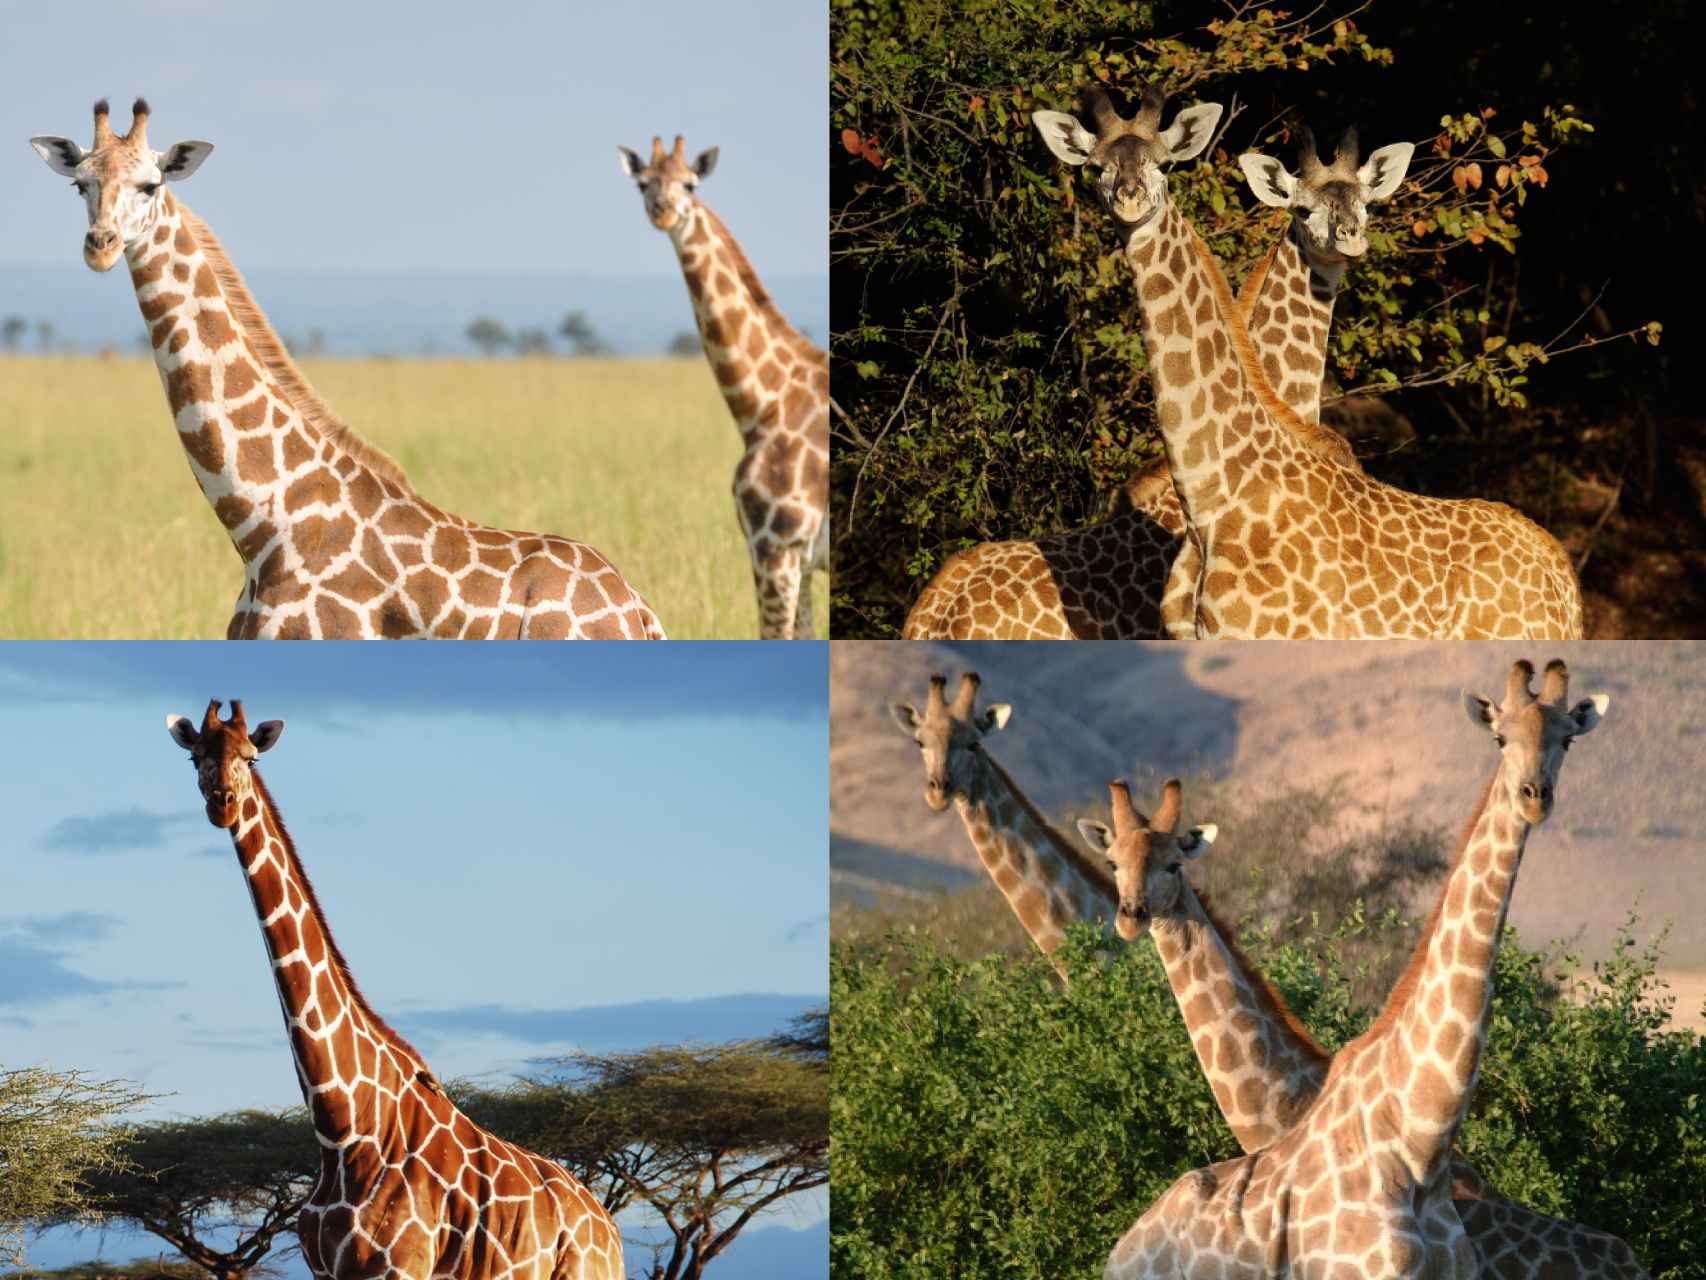 De izda a dcha y de arriba a abajo: Northern giraffe, Massai giraffe, Reticulated giraffe y Southern giraffe.